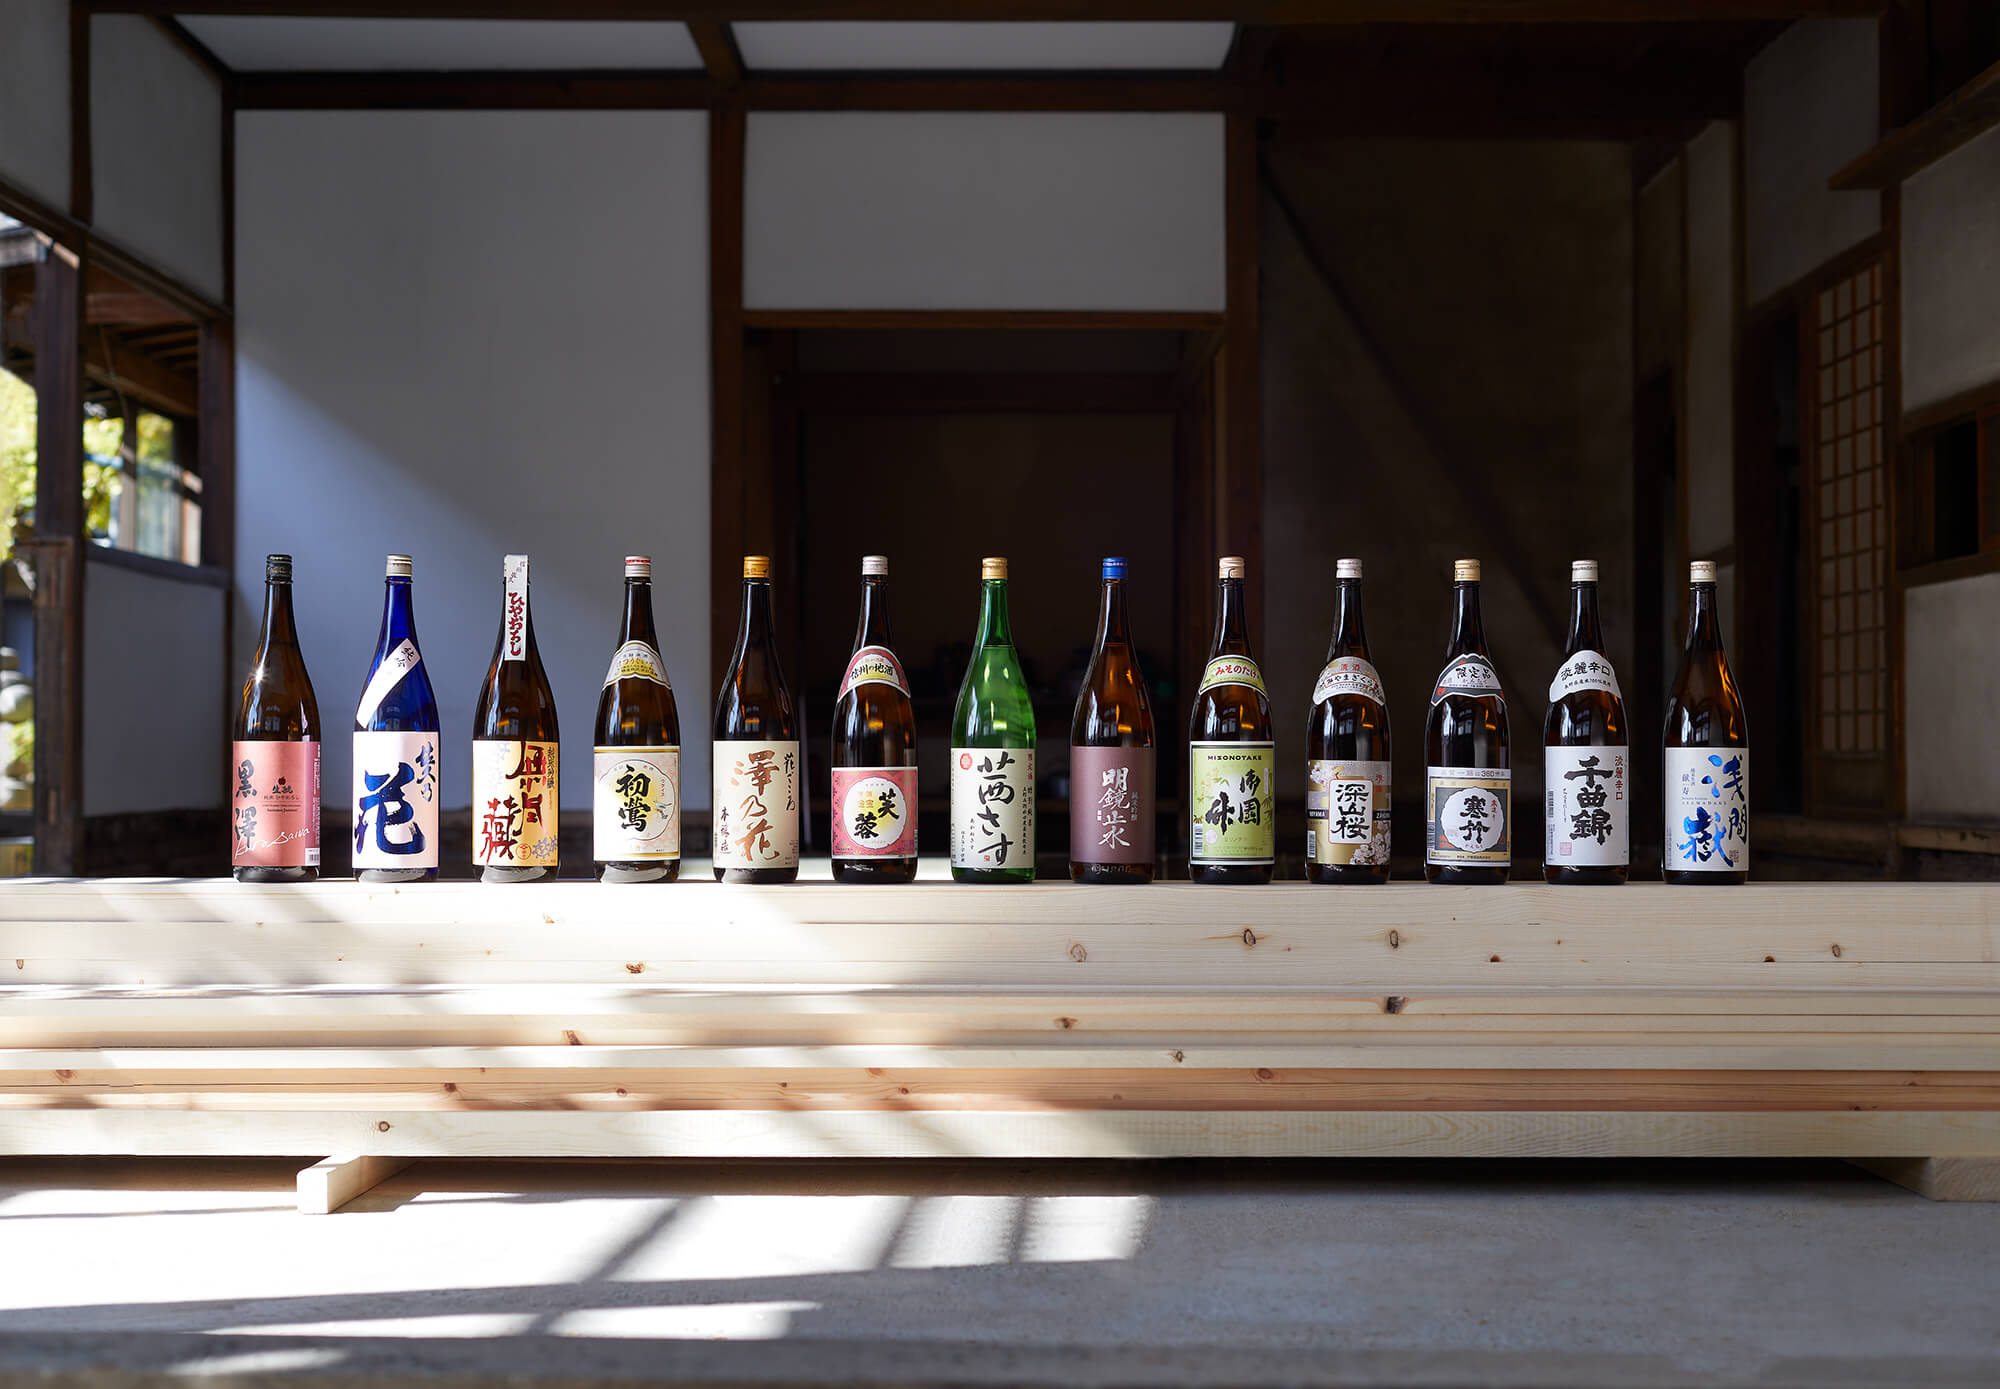 Crystal Clear ”Sake” ”Osawa Sake Brewery co., Ltd” - NIHONMONO